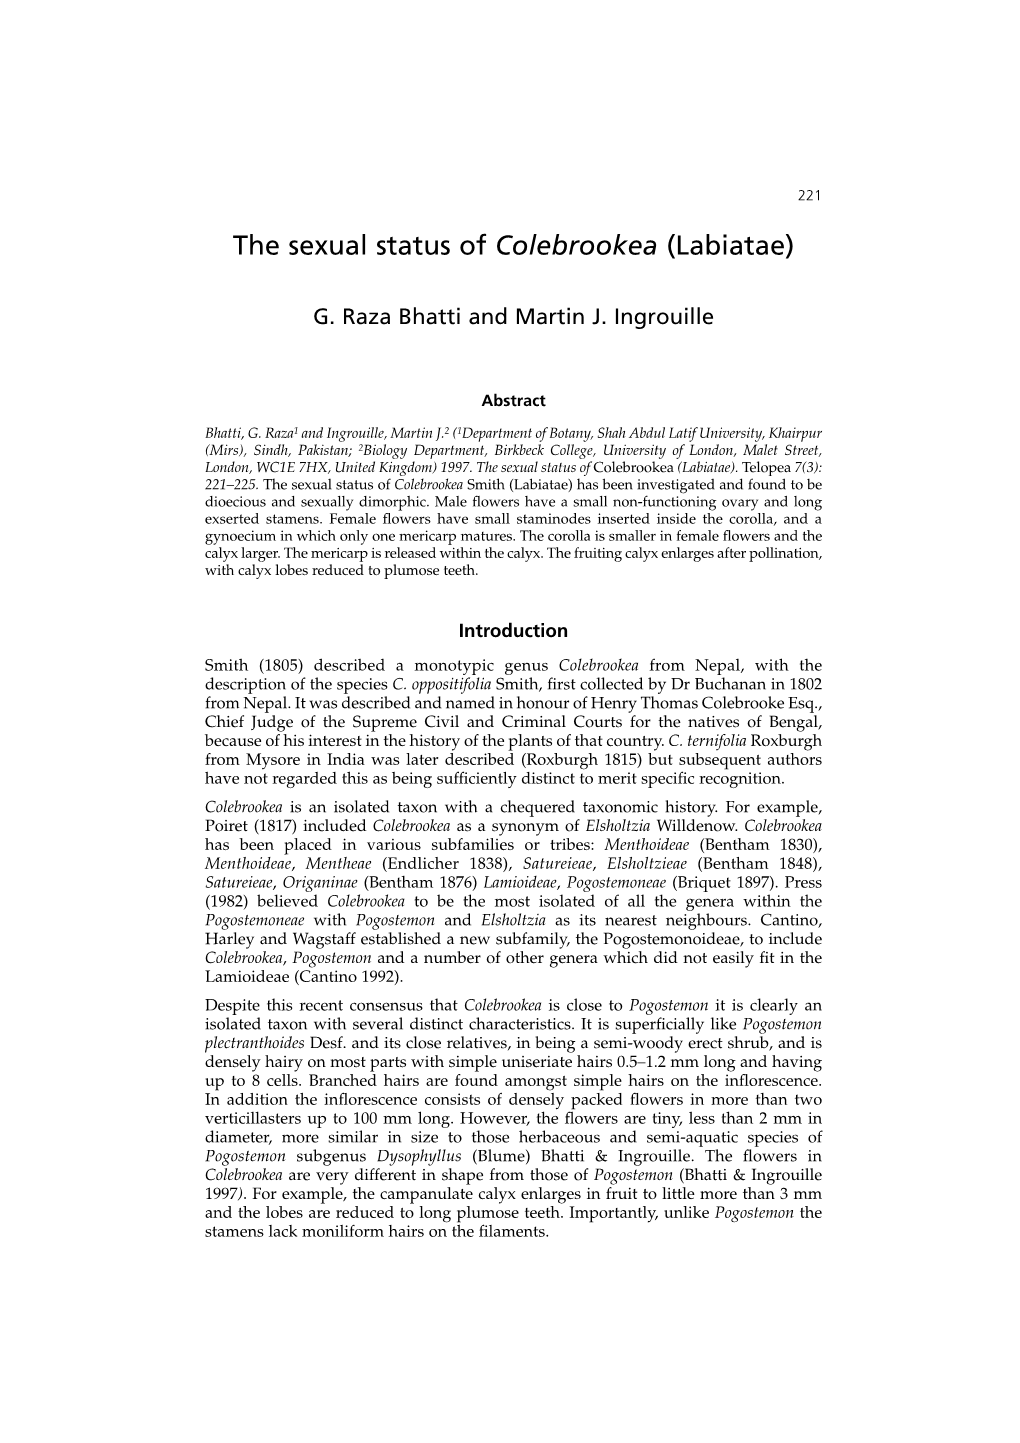 The Sexual Status of Colebrookea (Labiatae)